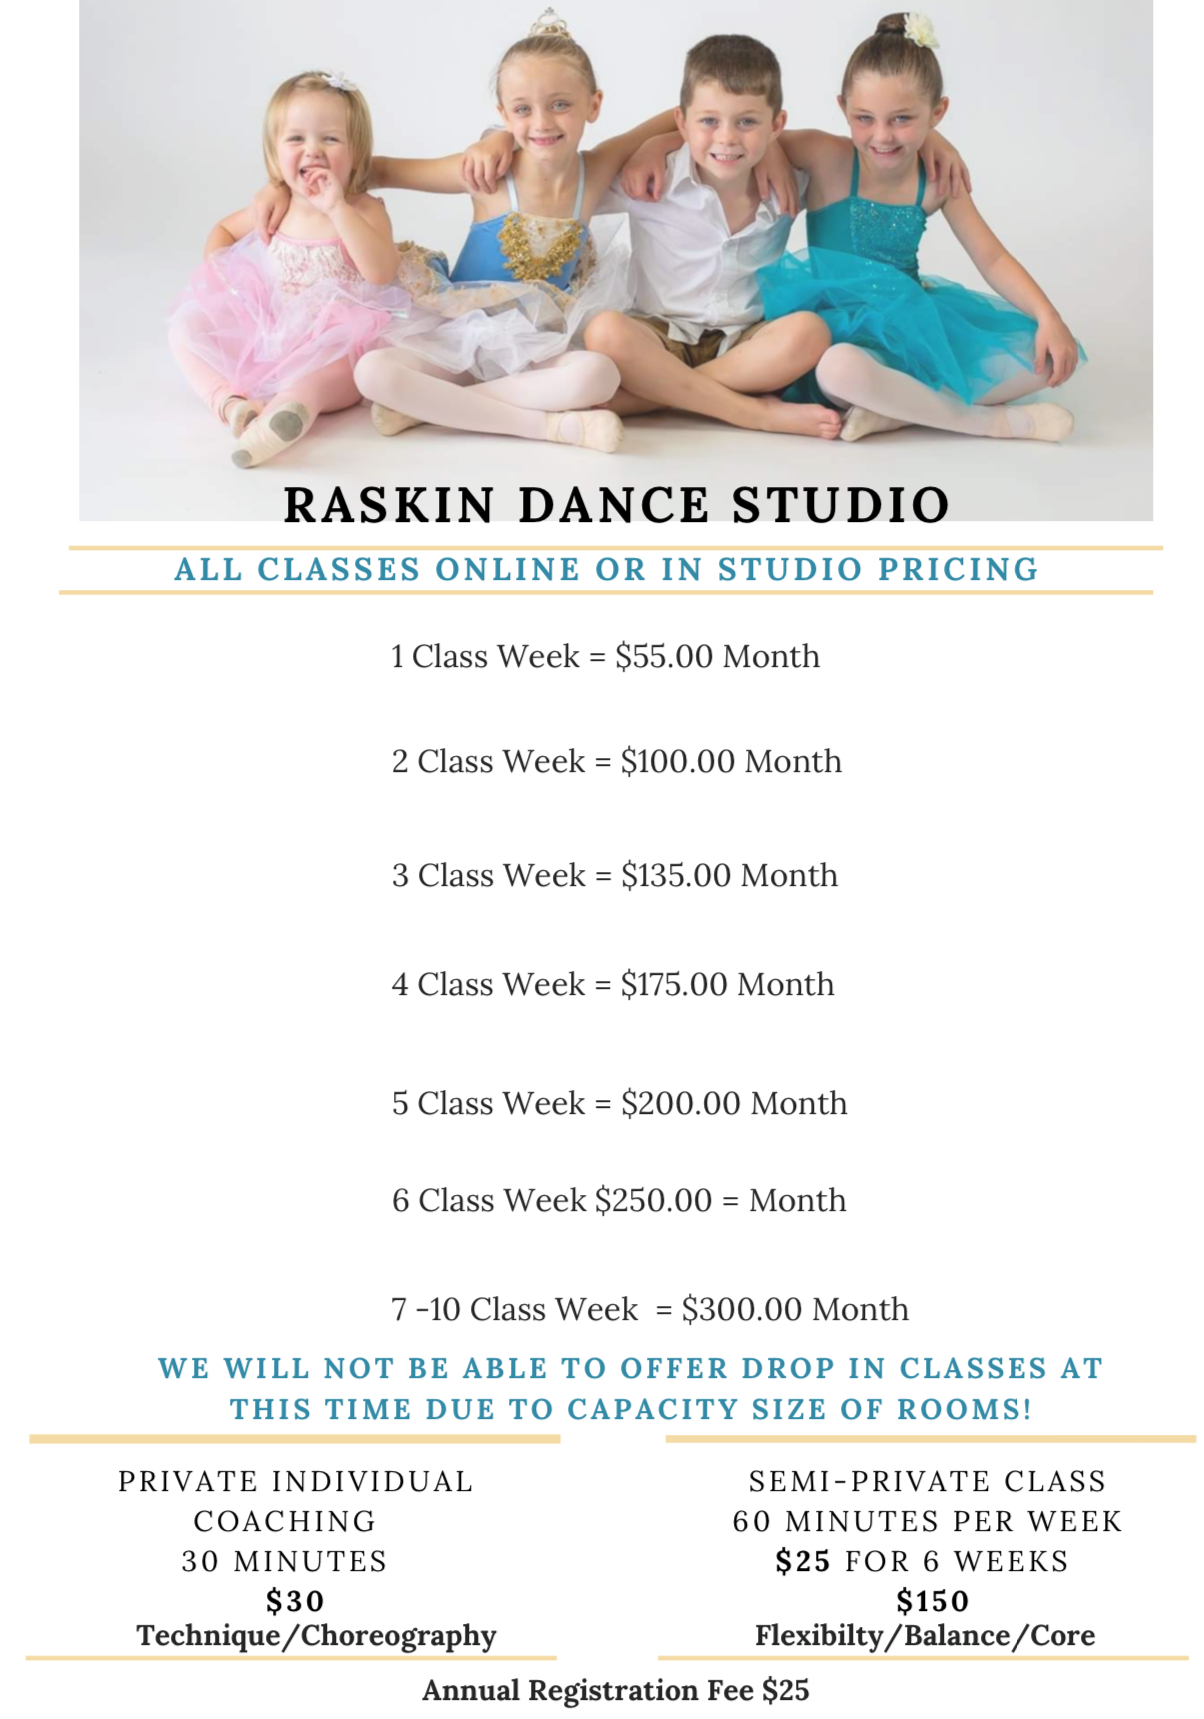 Raskin Dance Studio